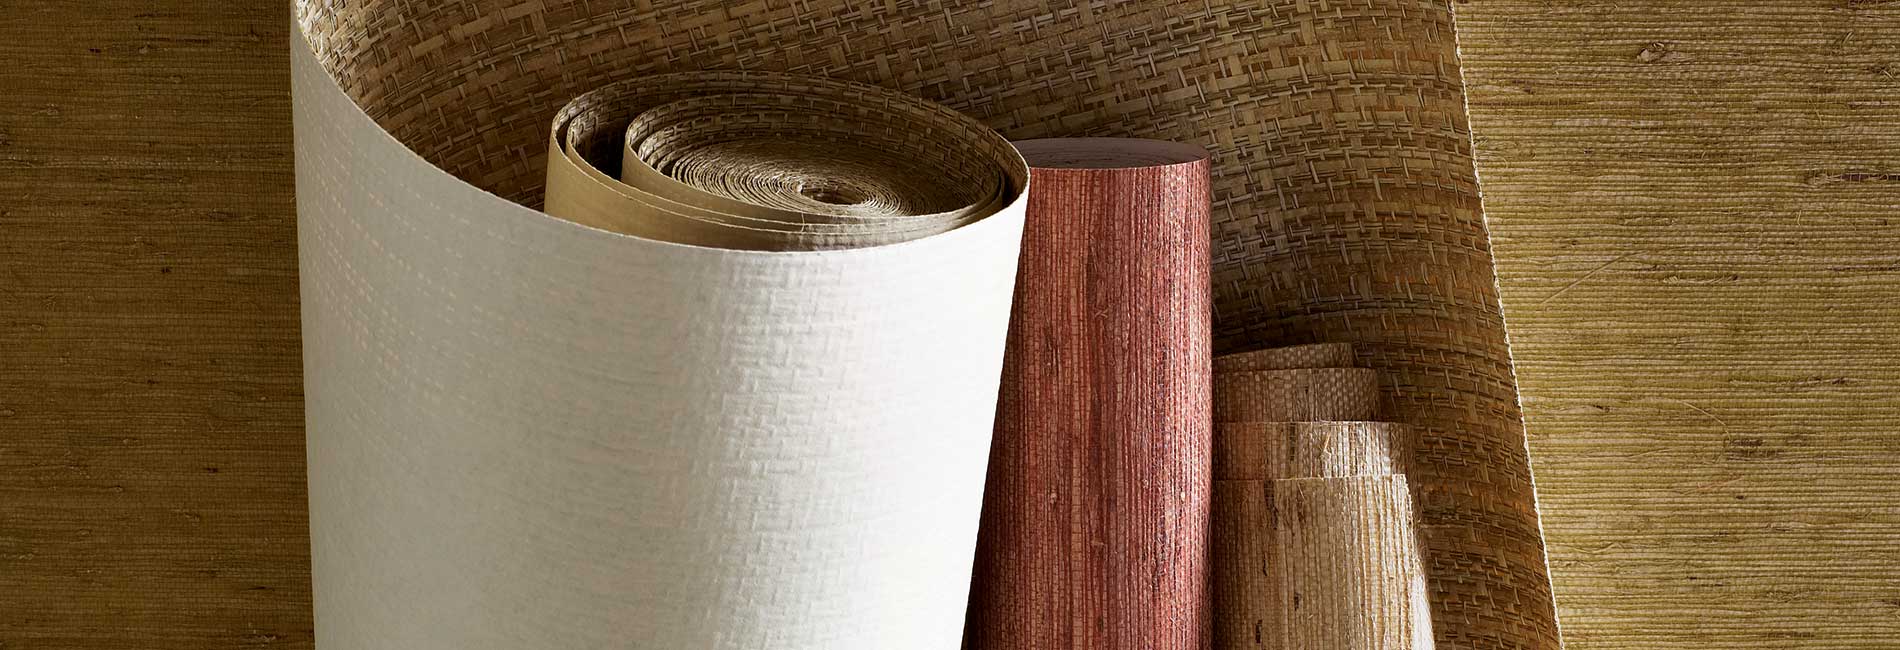 Textured wallpaper rolls